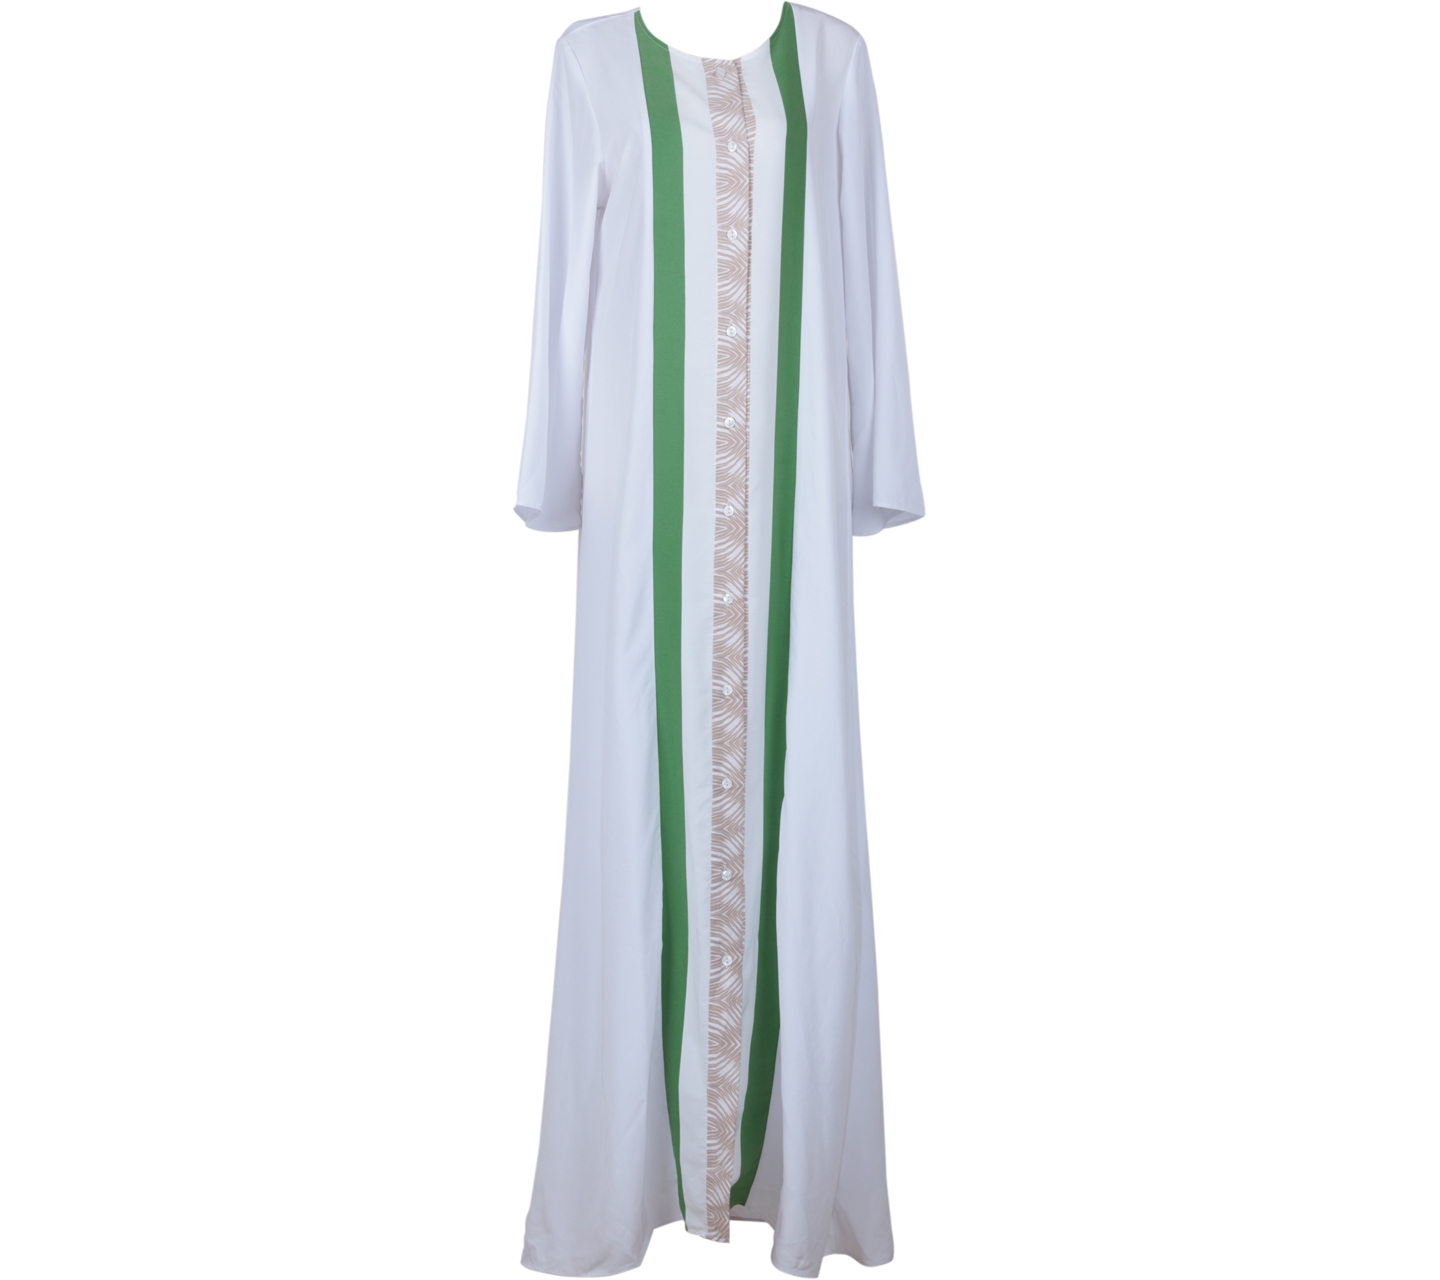 Novierock White And Green Patterned Long Dress